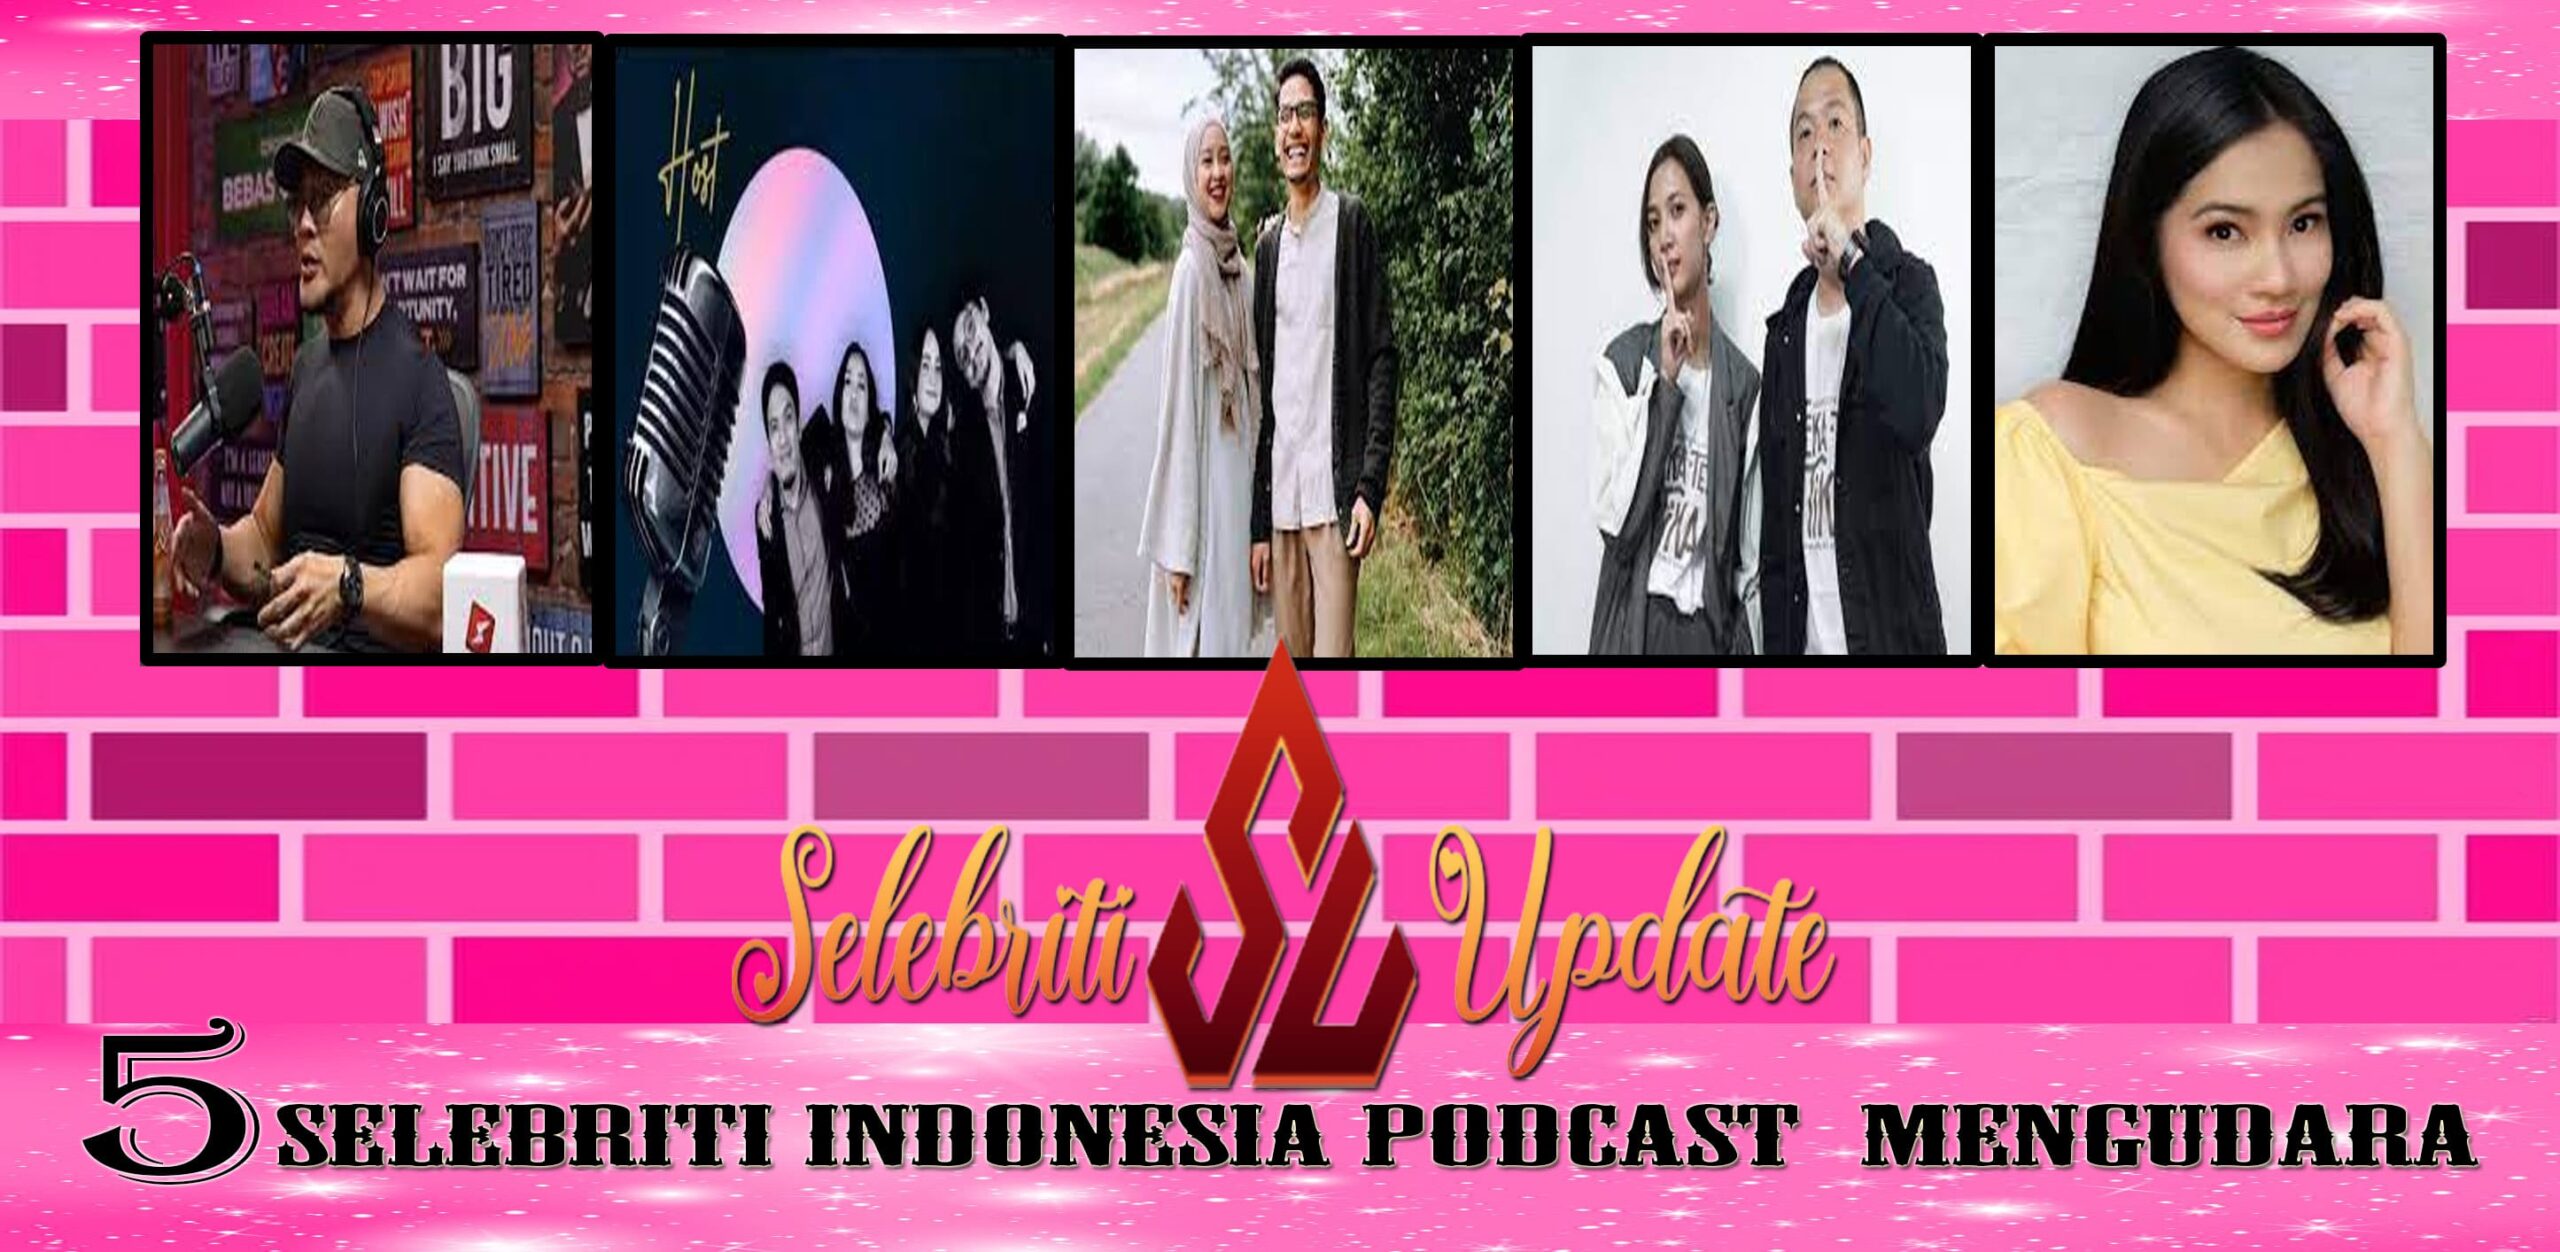 5 Selebriti Indonesia Podcast  Mengudara